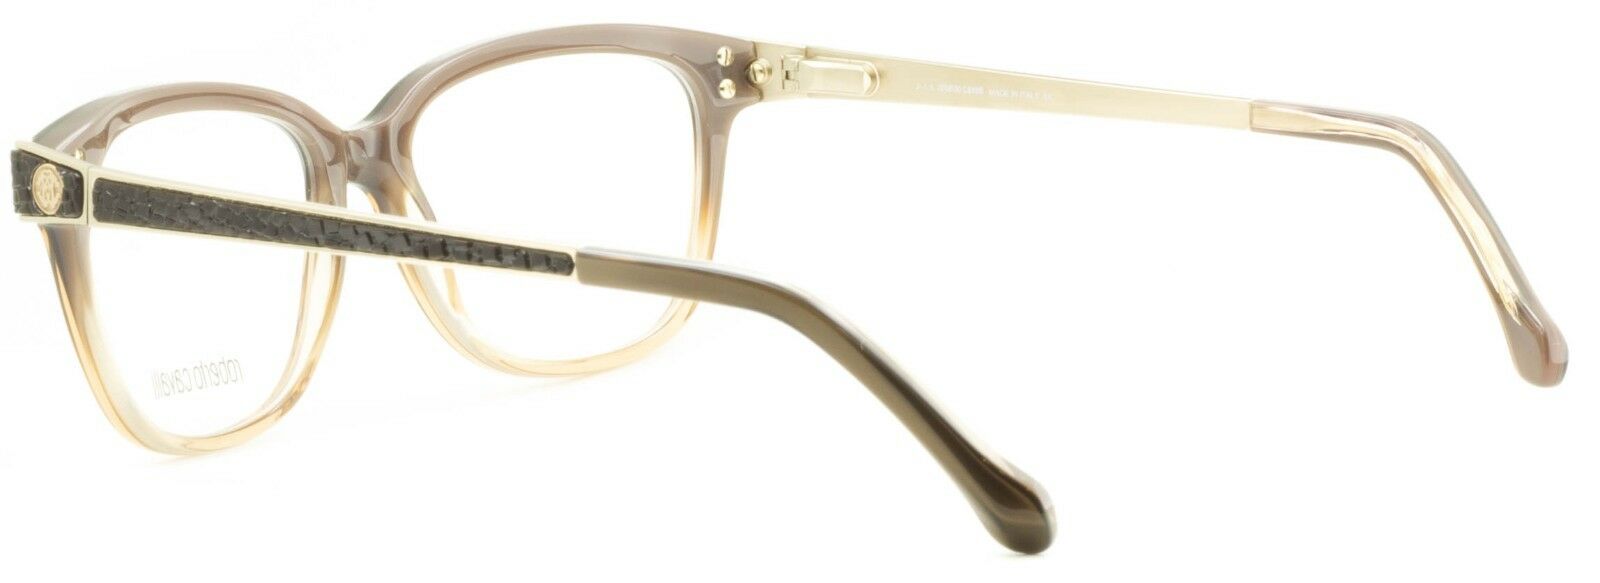 ROBERTO CAVALLI Polaris 934 050 RX Optical FRAMES NEW Glasses Eyewear Italy-BNIB